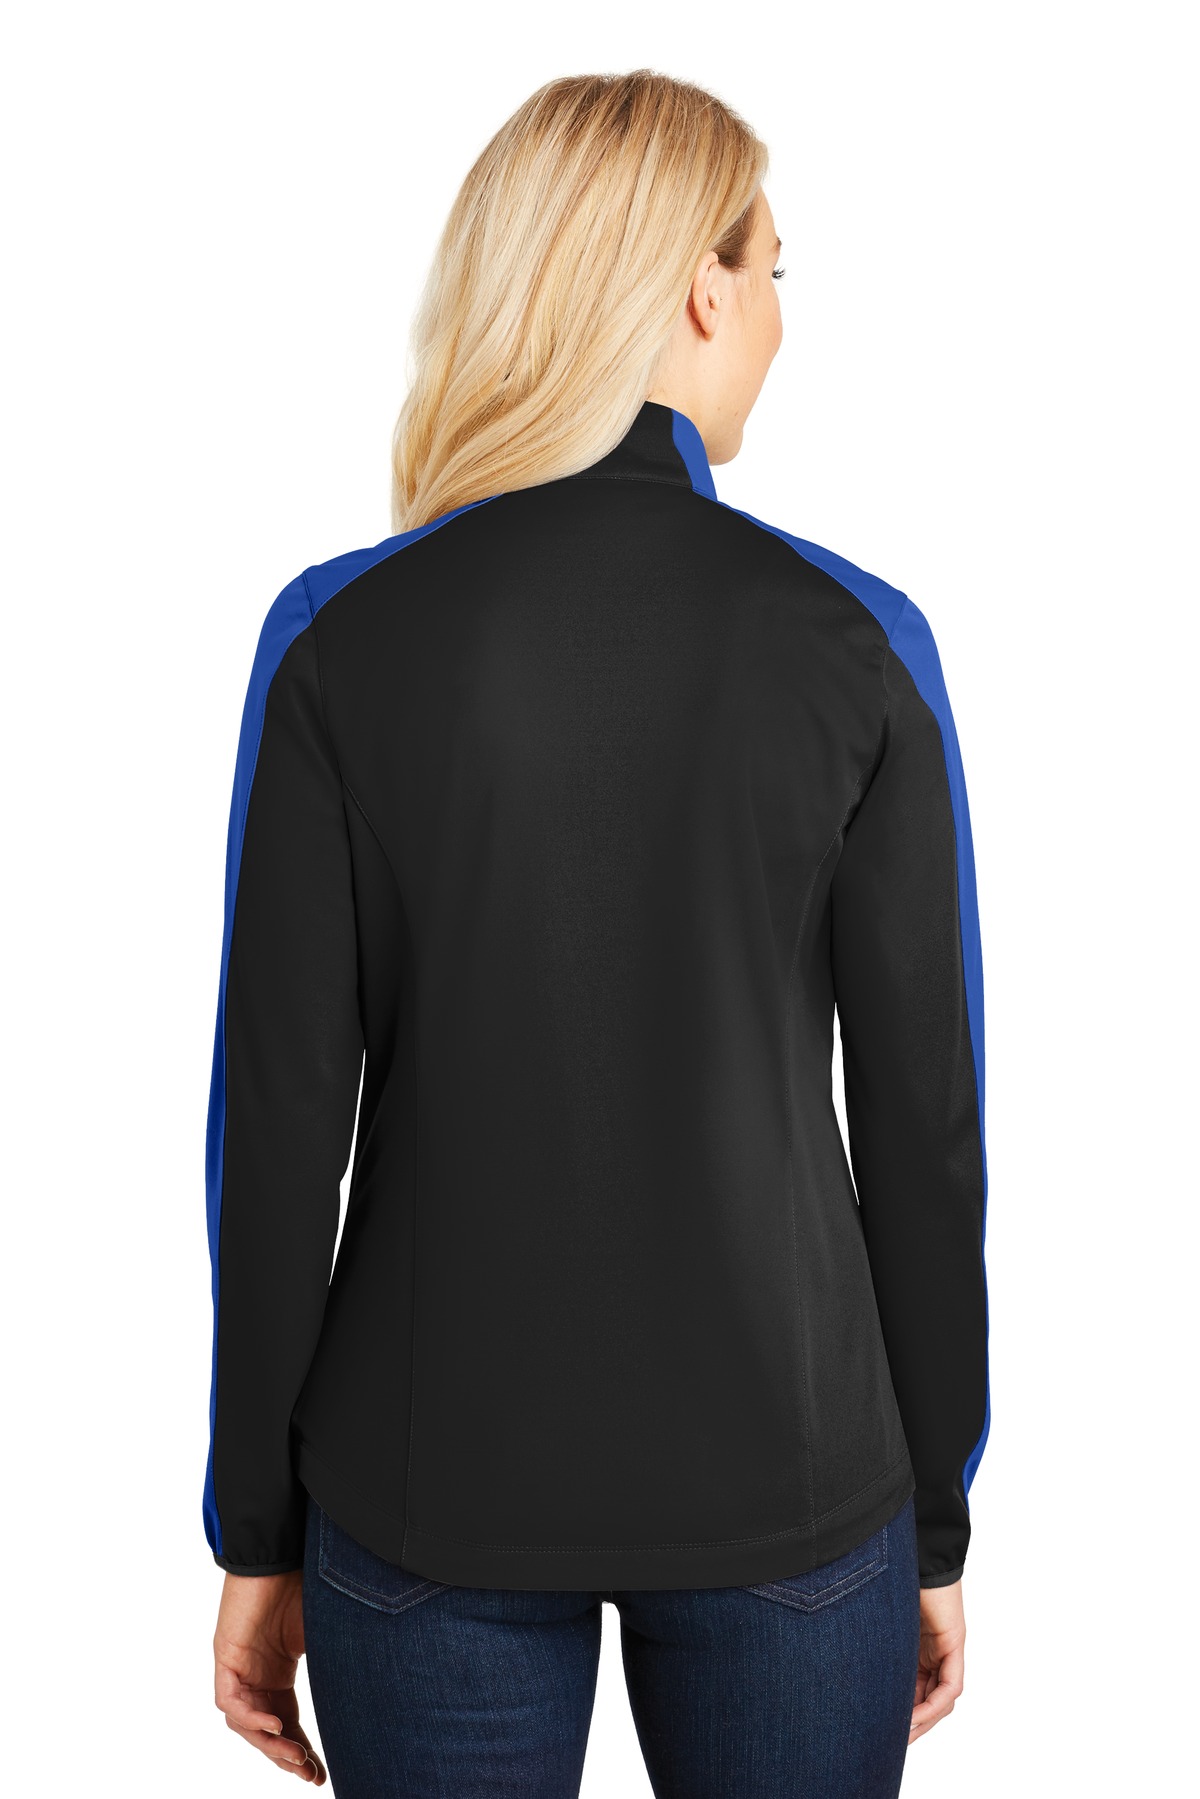 Port Authority Ladies Active Colorblock Soft Shell Jacket-2XL (Deep Black/ True Royal) - image 2 of 6